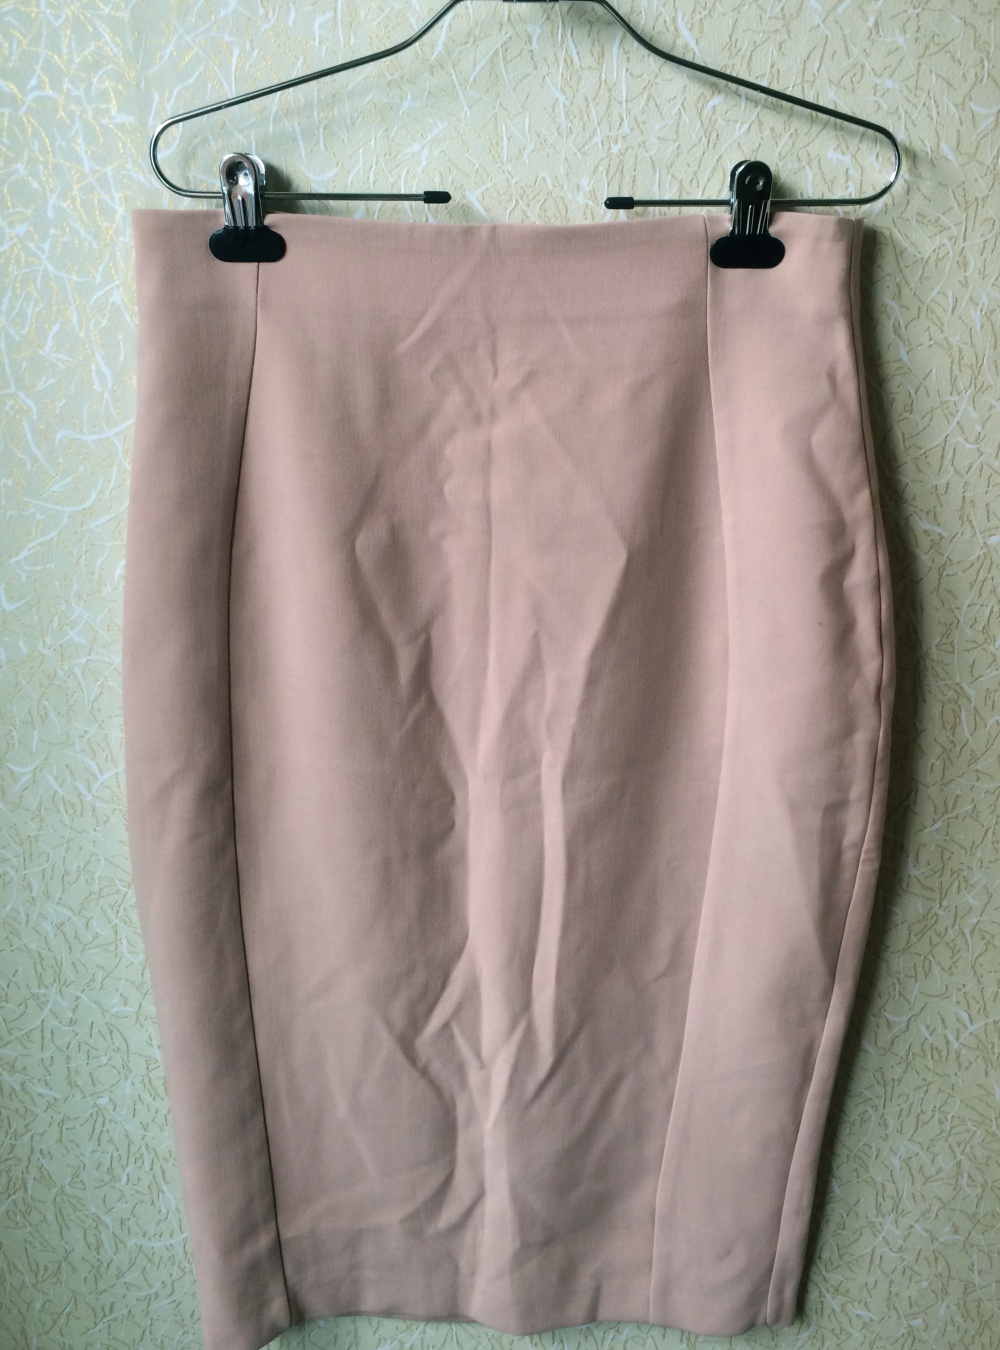 Новая юбка-карандаш цвета nude River Island (14 UK)